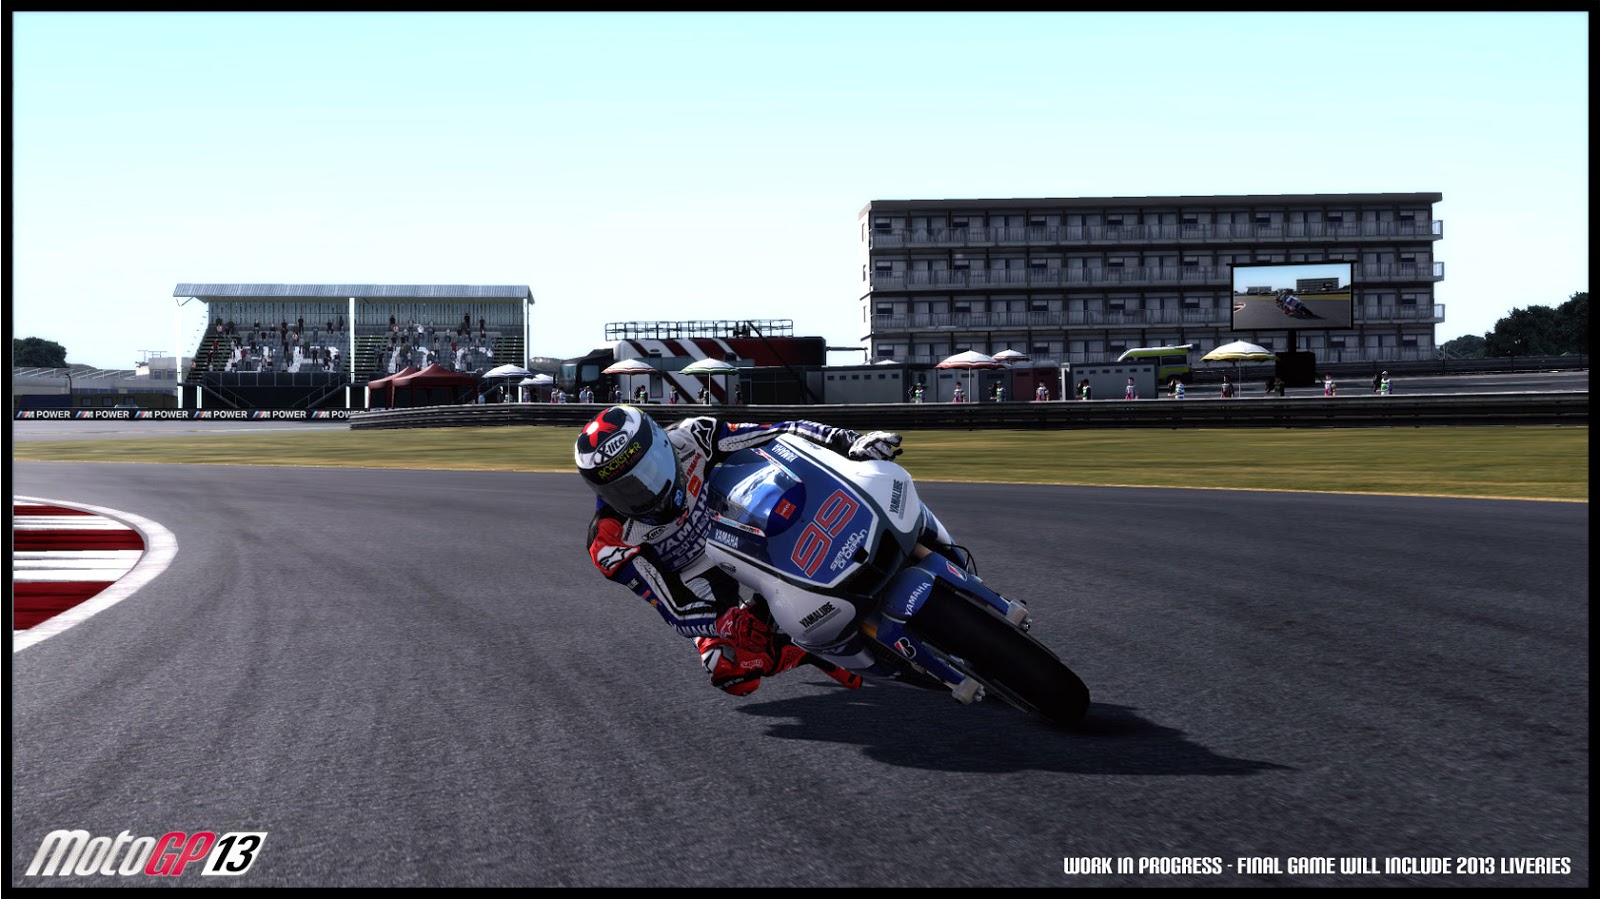 MotoGP 1 | PC Games Free Download Full Version Highly Compressed